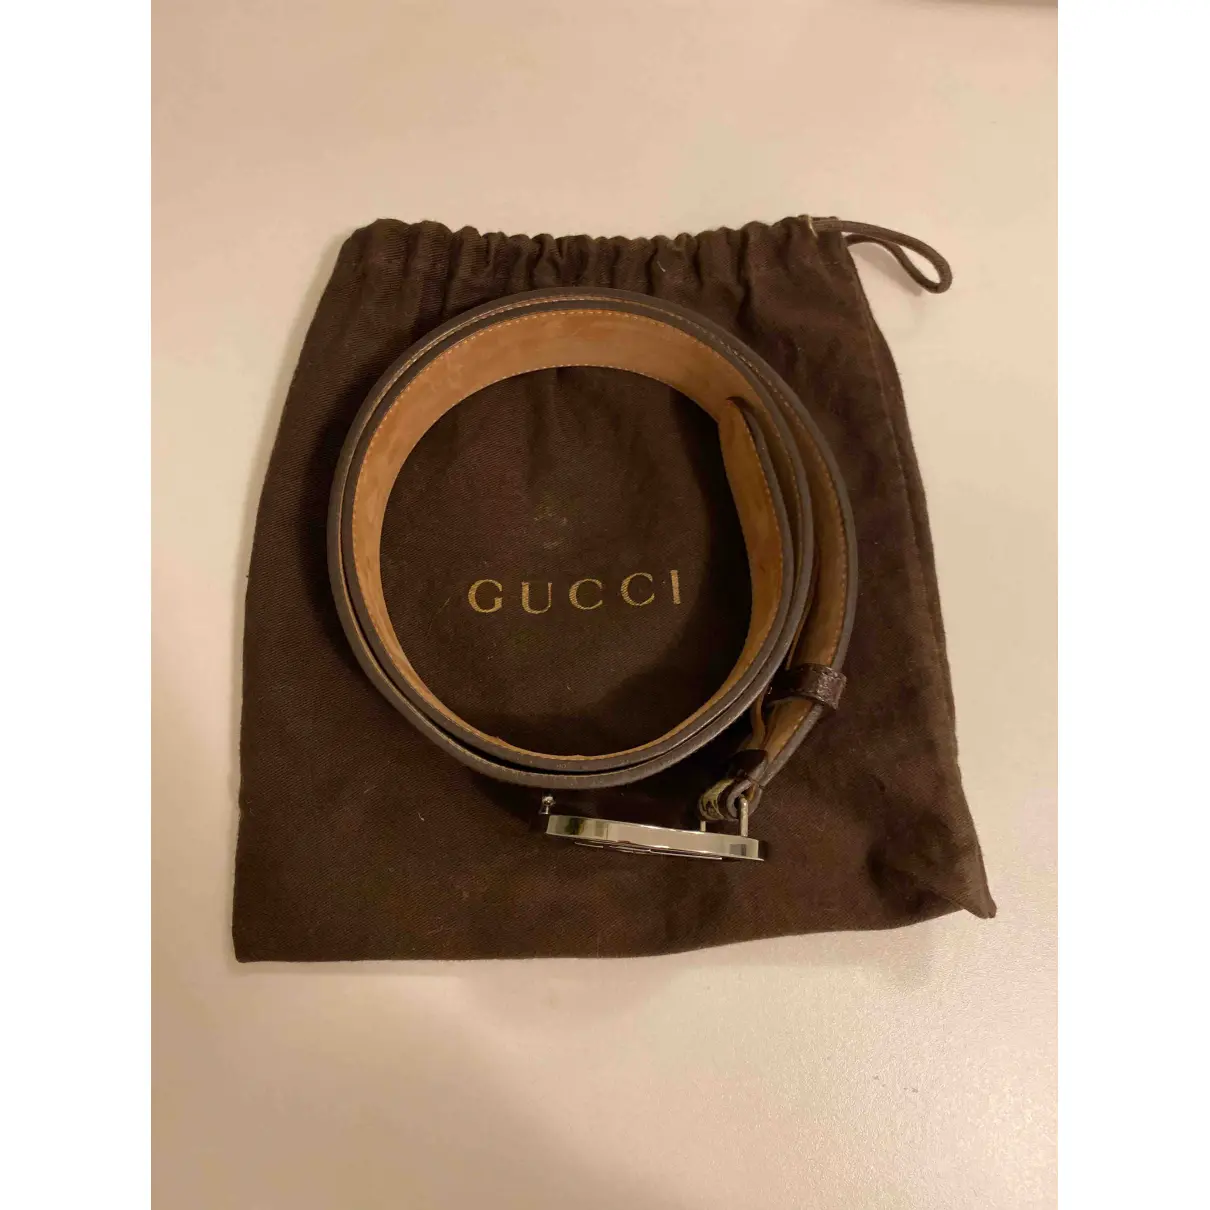 Interlocking Buckle leather belt Gucci